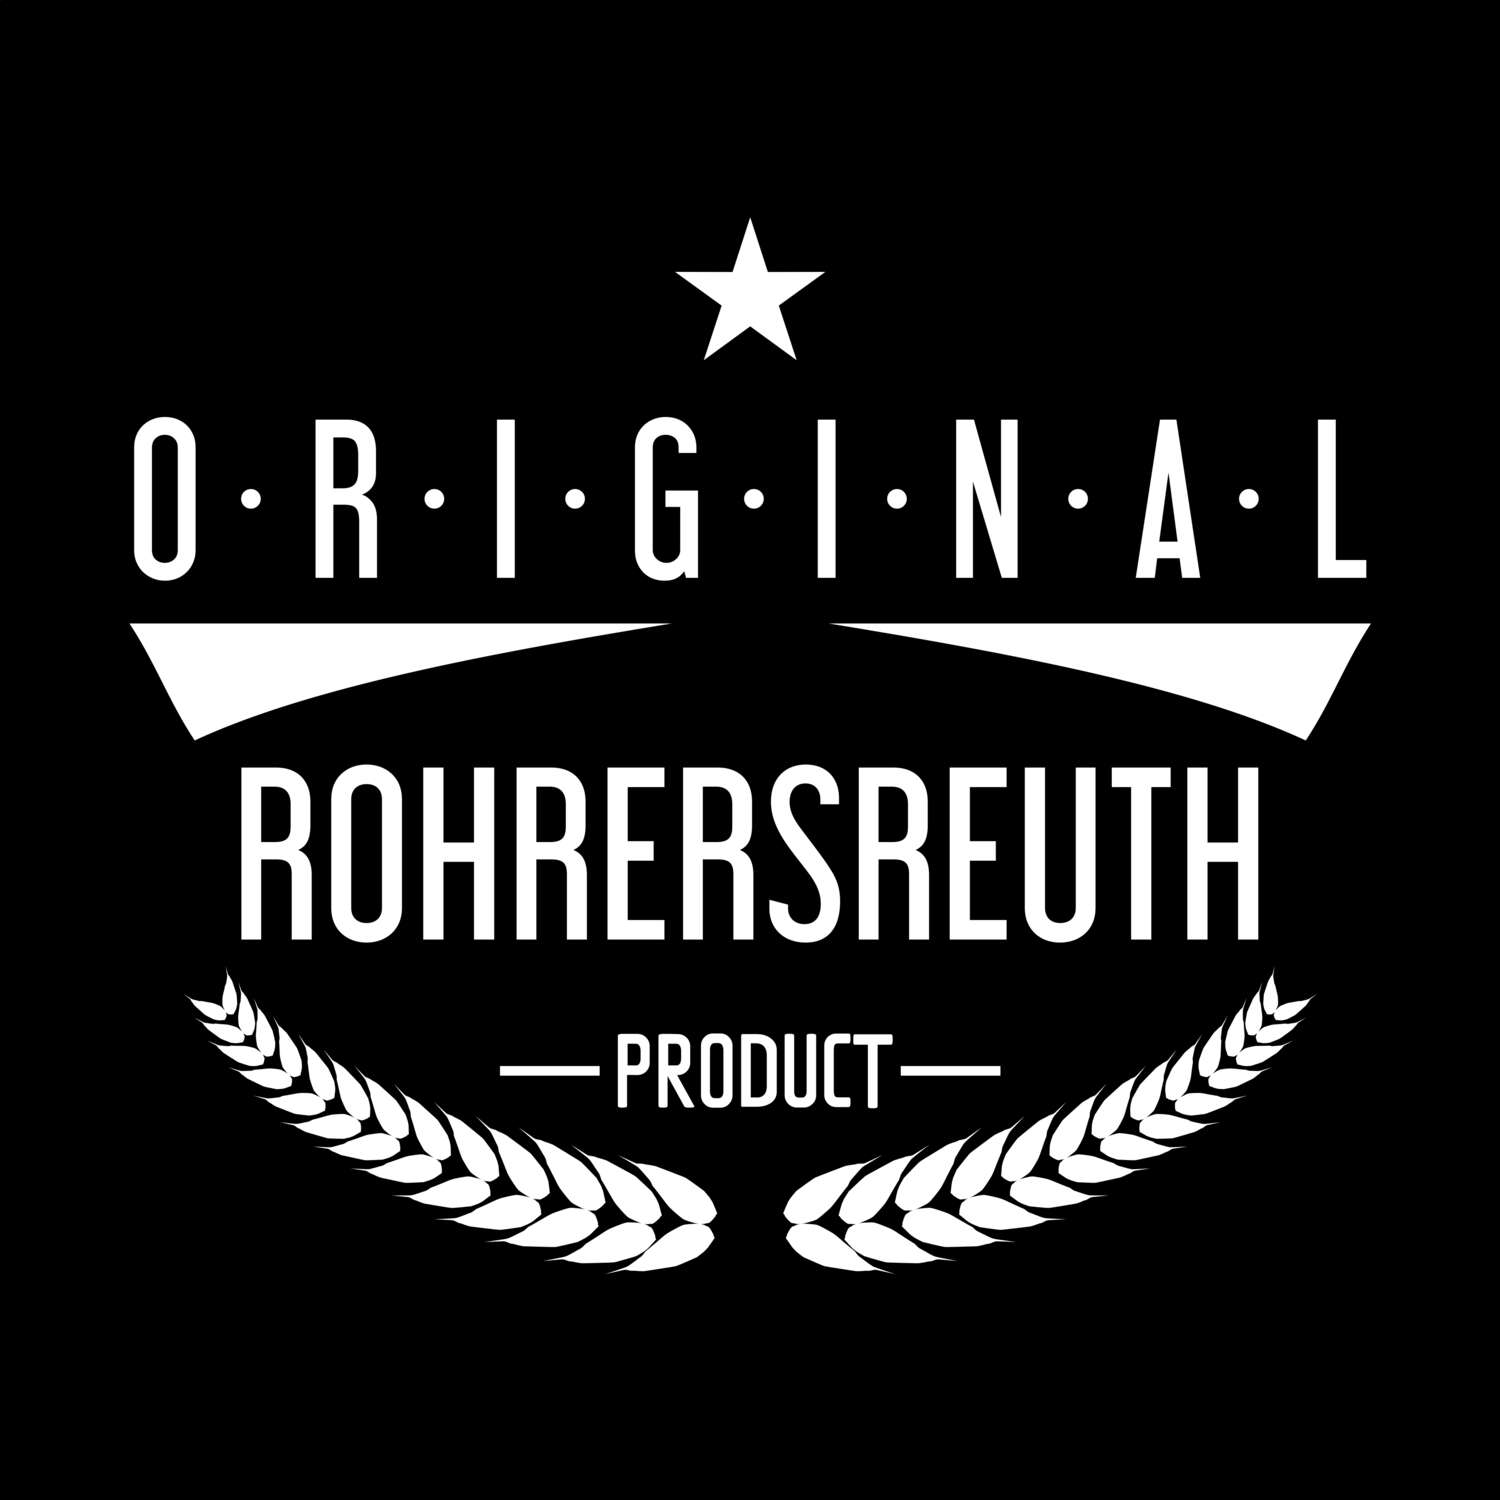 Rohrersreuth T-Shirt »Original Product«